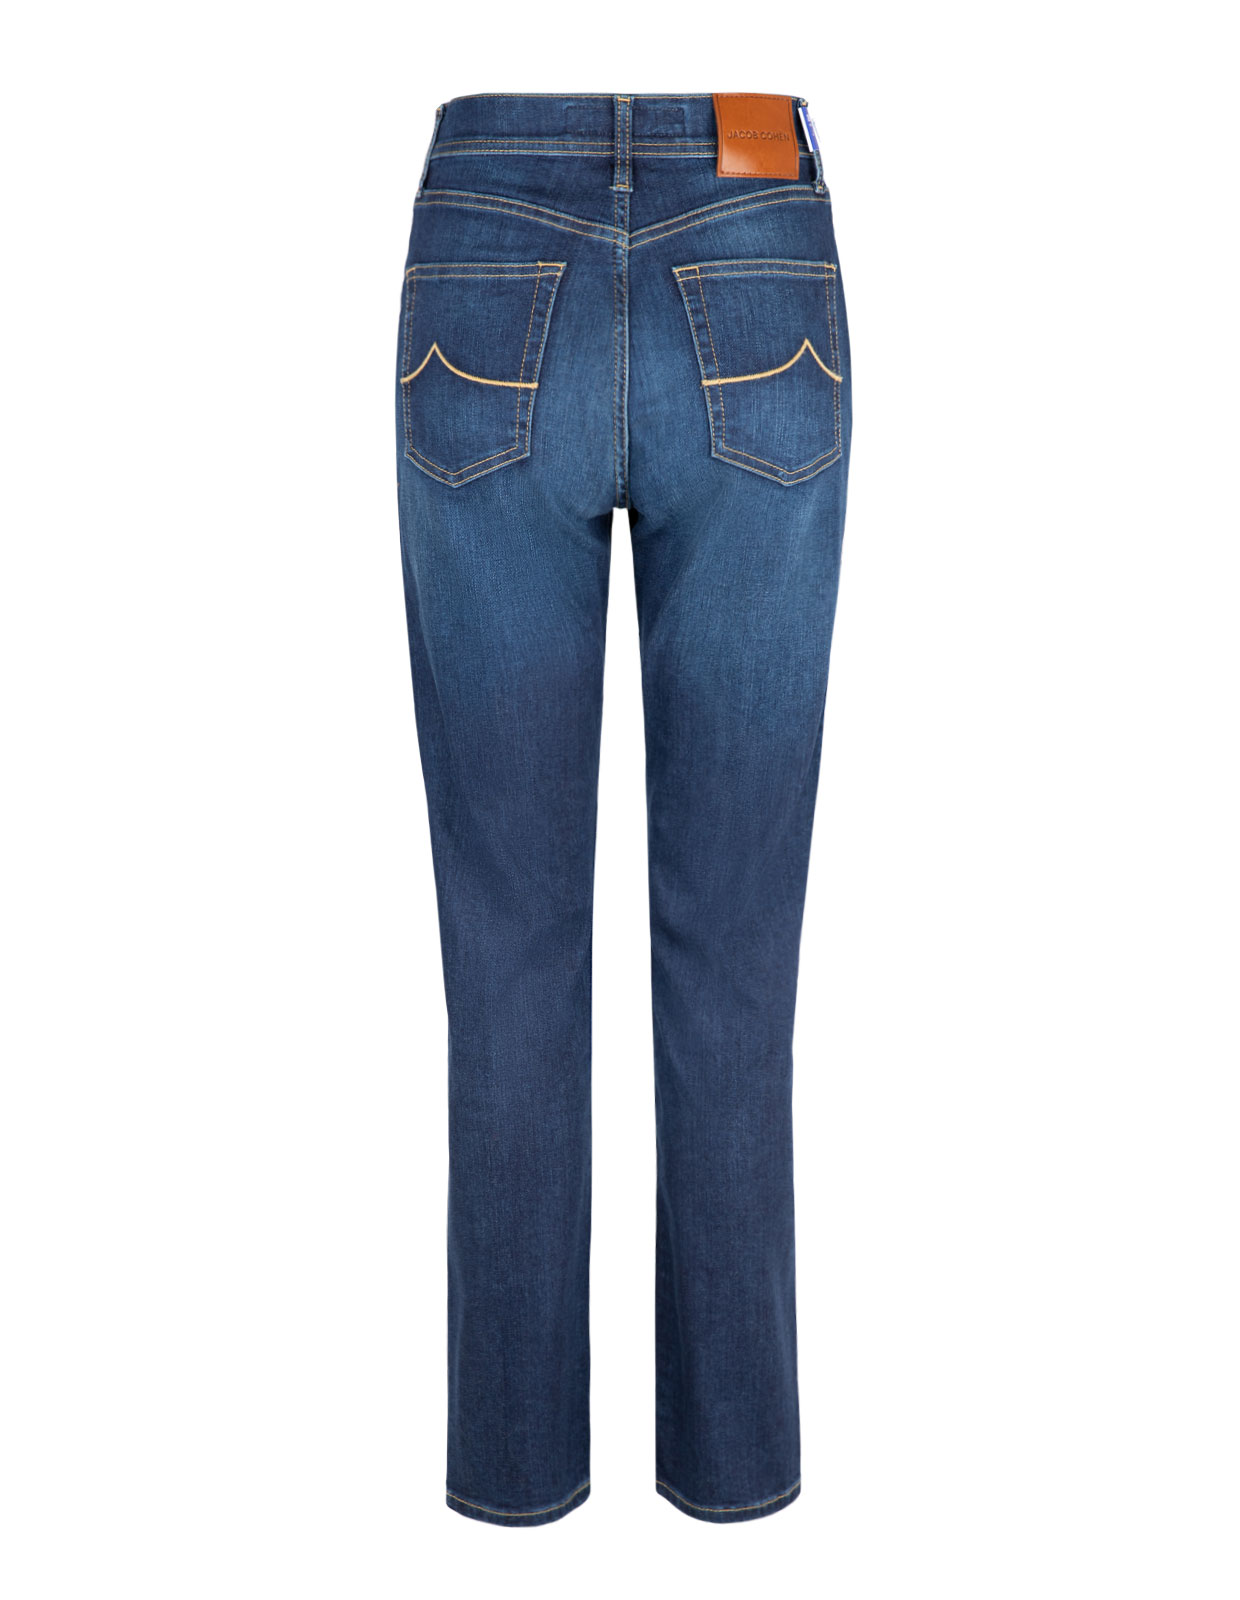 Olivia Slim Fit 5 Pocket Jeans Dark Blue Denim